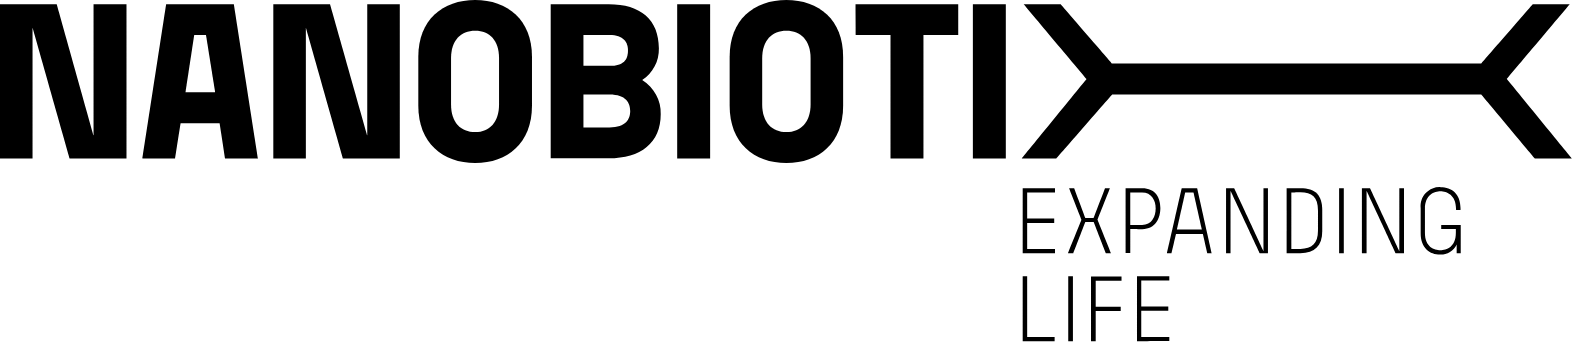 Nanobiotix logo large (transparent PNG)